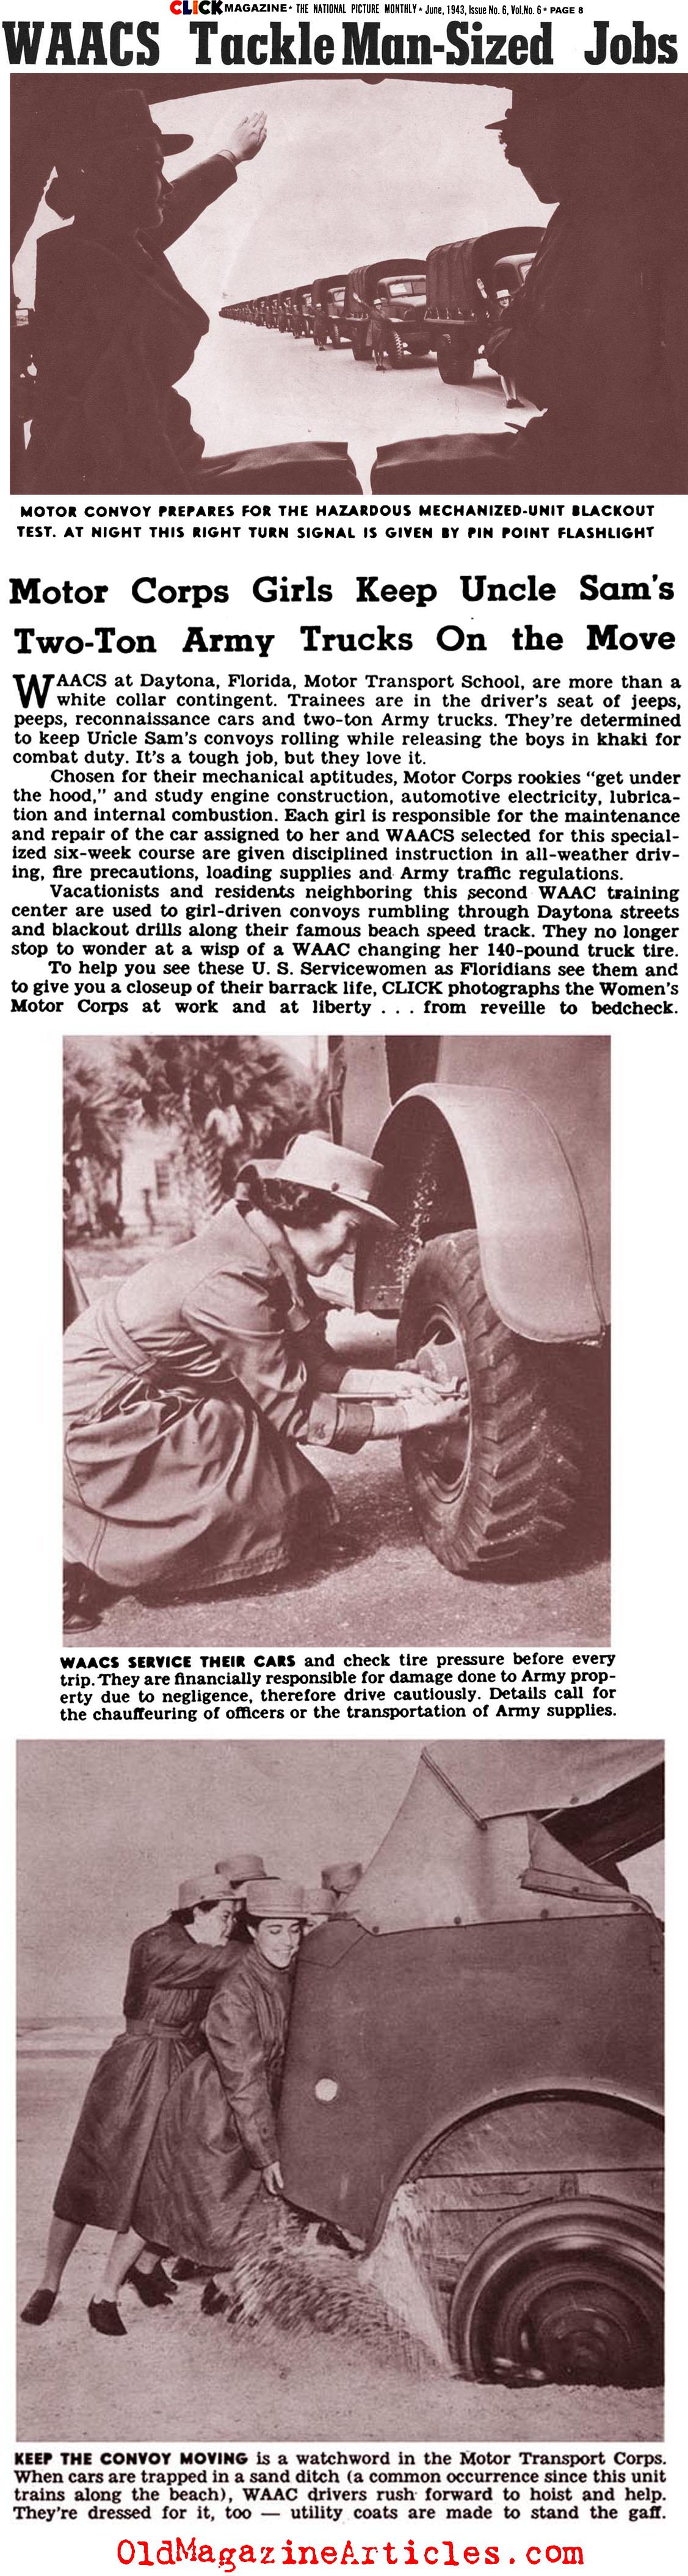 WAAC Truck Drivers (Click Magazine, 1943)